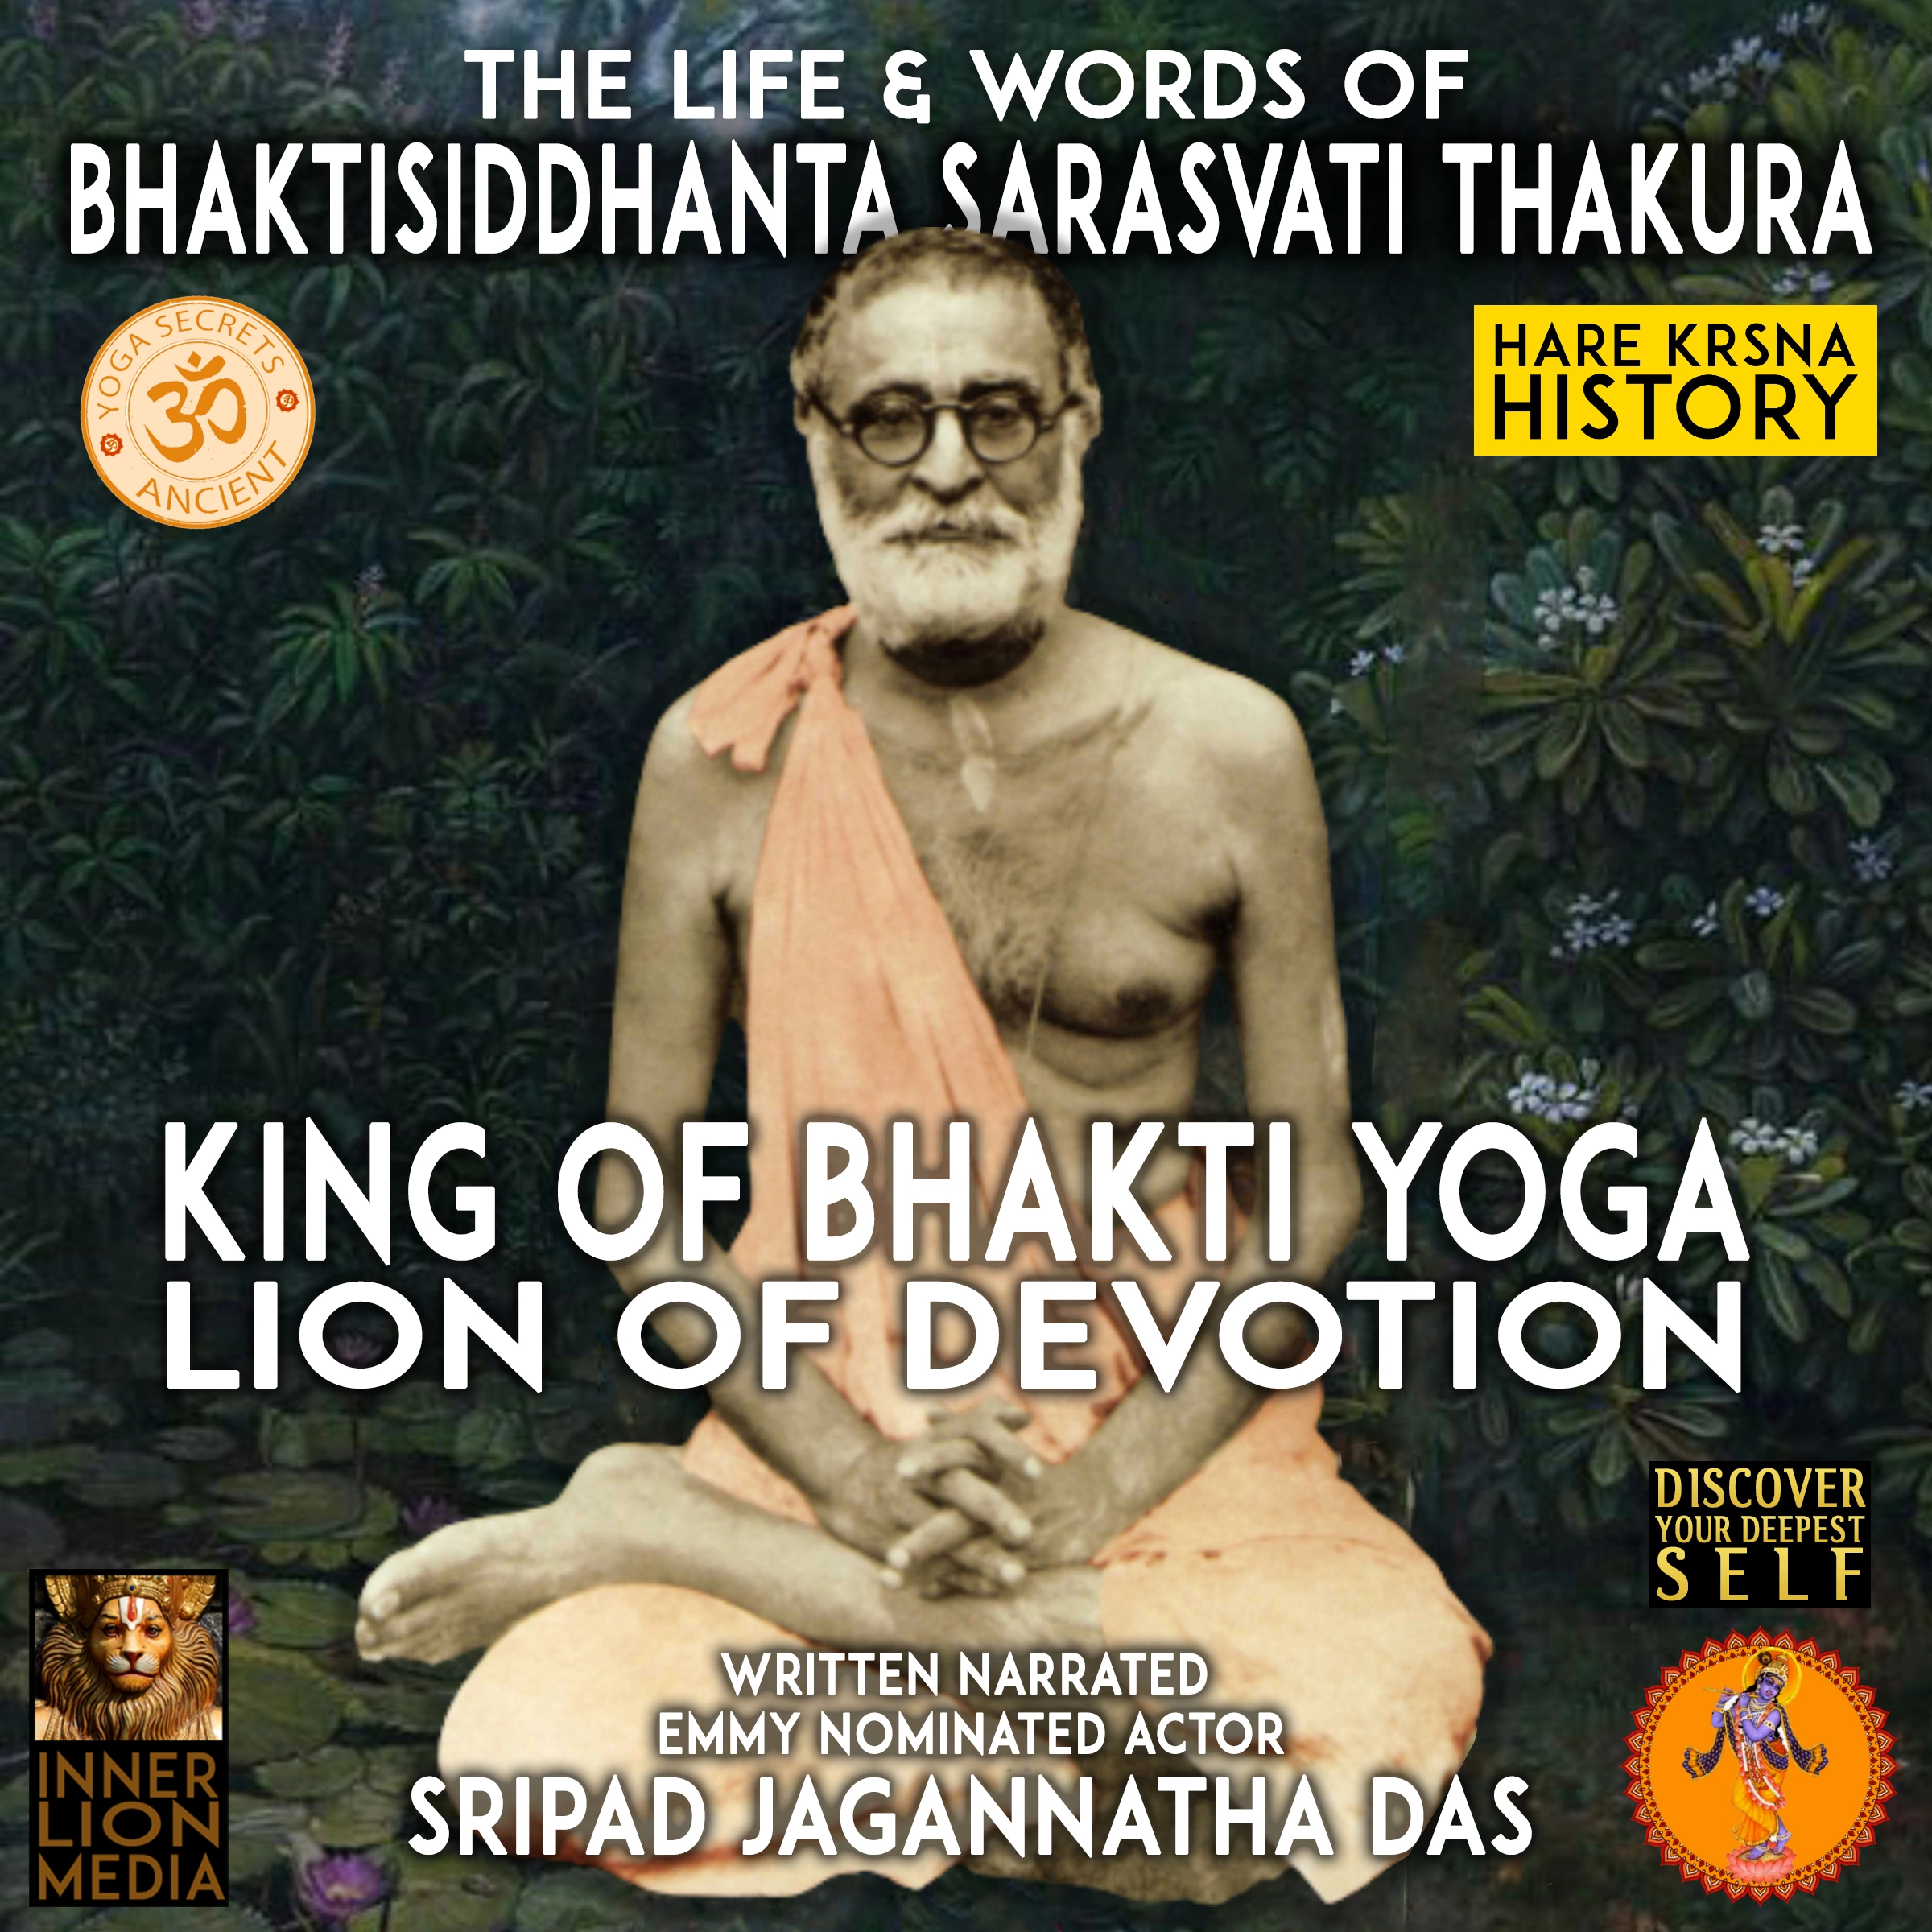 The Life & Words Of Bhaktisiddhanta Sarasvati Thakura Audiobook by Sripad Jagannatha Das